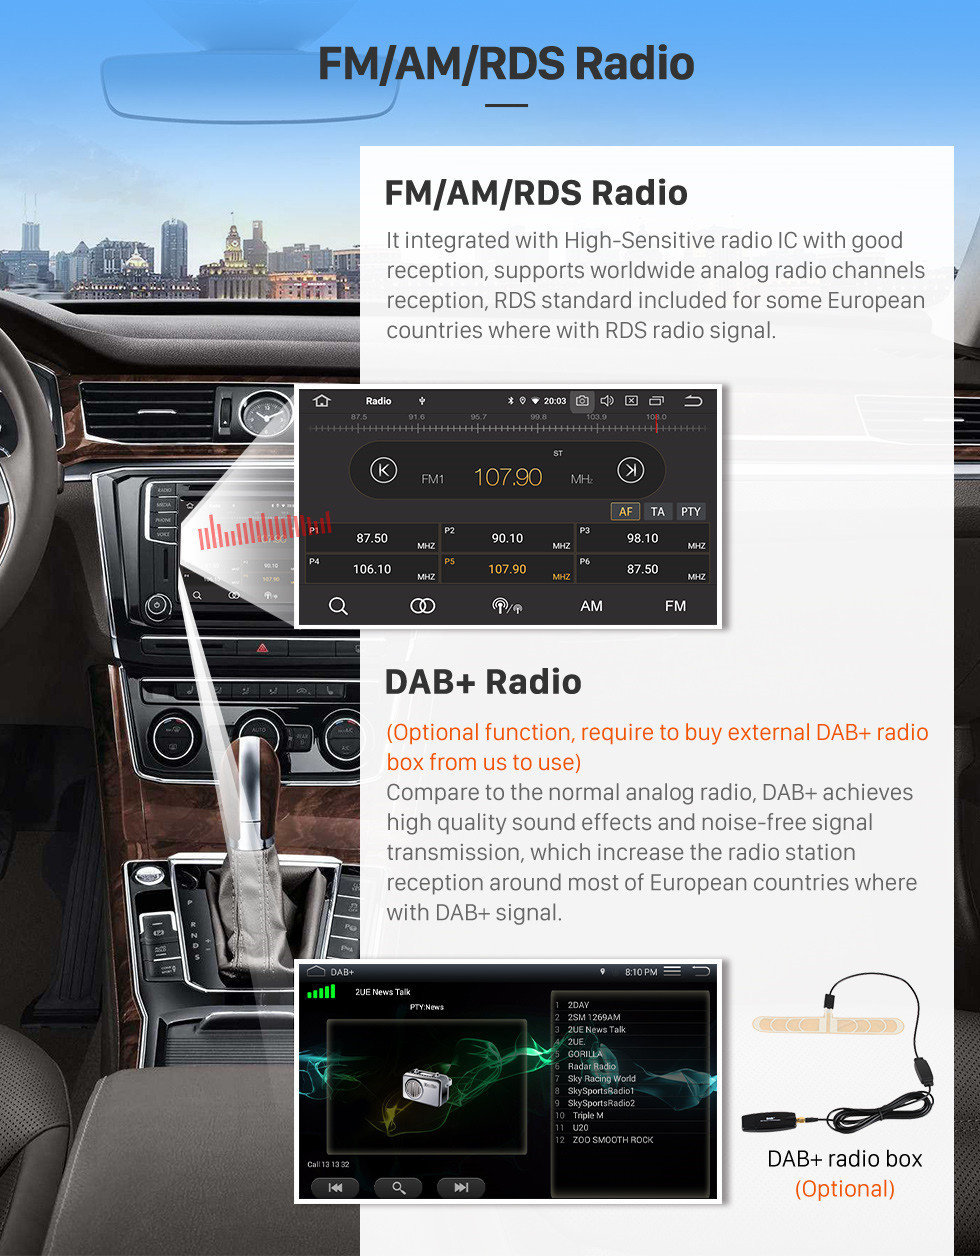 Seicane 2007-2017 Kia Sportage Handbuch A / C Android 11.0 9 Zoll GPS-Navigations-Radio Bluetooth HD-Touchscreen USB Carplay-Musikunterstützung Lenkradsteuerung